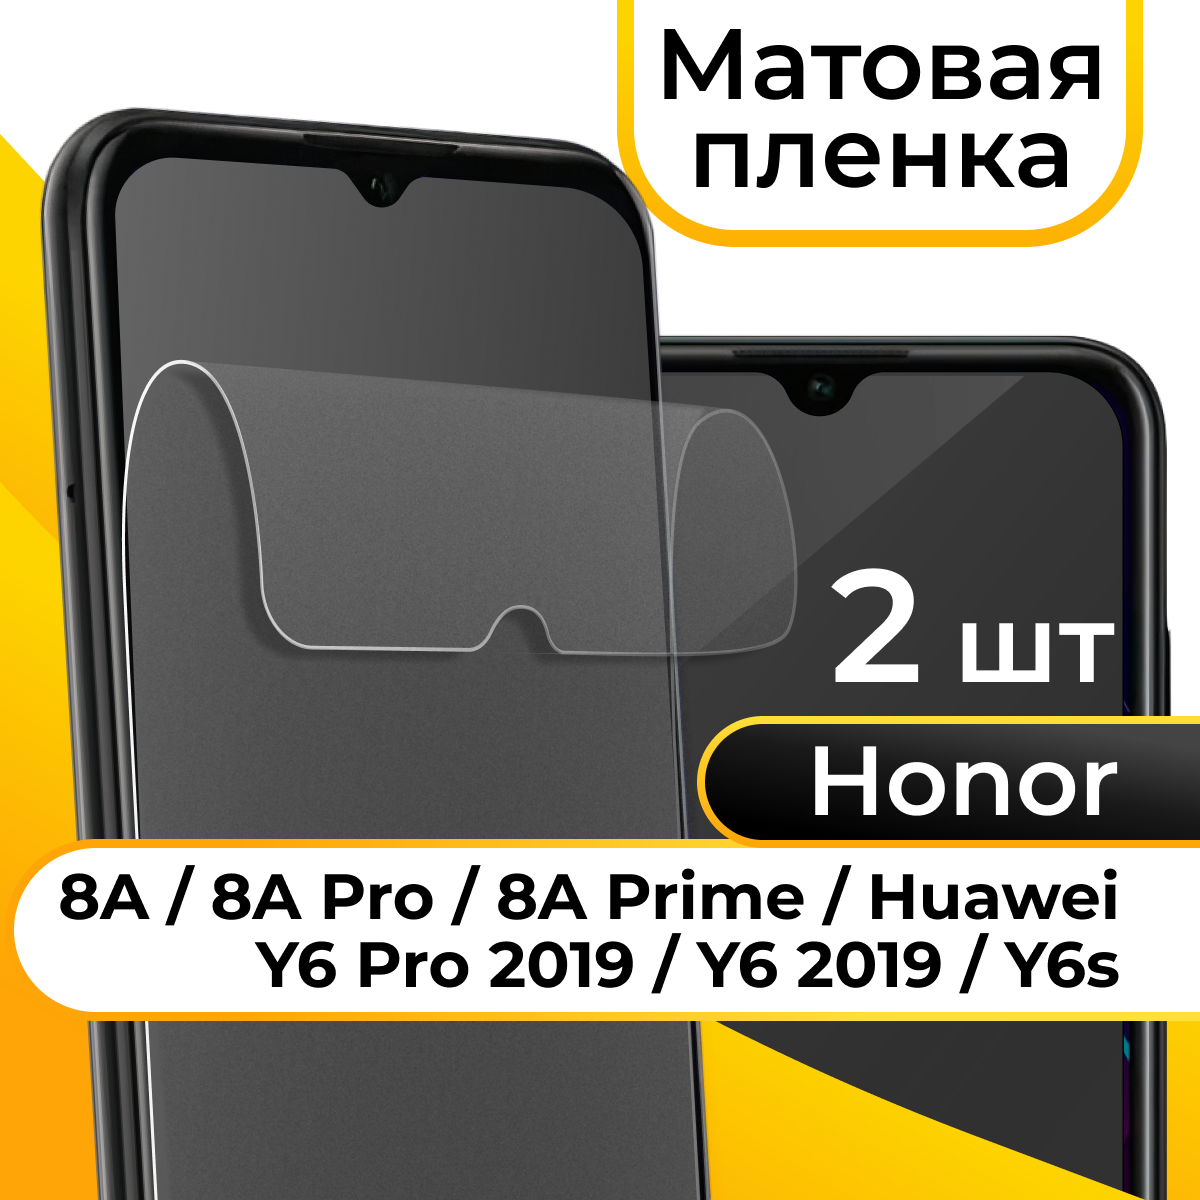 Комплект 2 шт. Матовая пленка для смартфона Honor 8A, 8A Pro, 8A Prime, Huawei Y6, Y6 Pro 2019, Y6s / Хонор 8А, 8А Про, 8А Прайм, Хуавей У6, У6 Про 2019, У6с